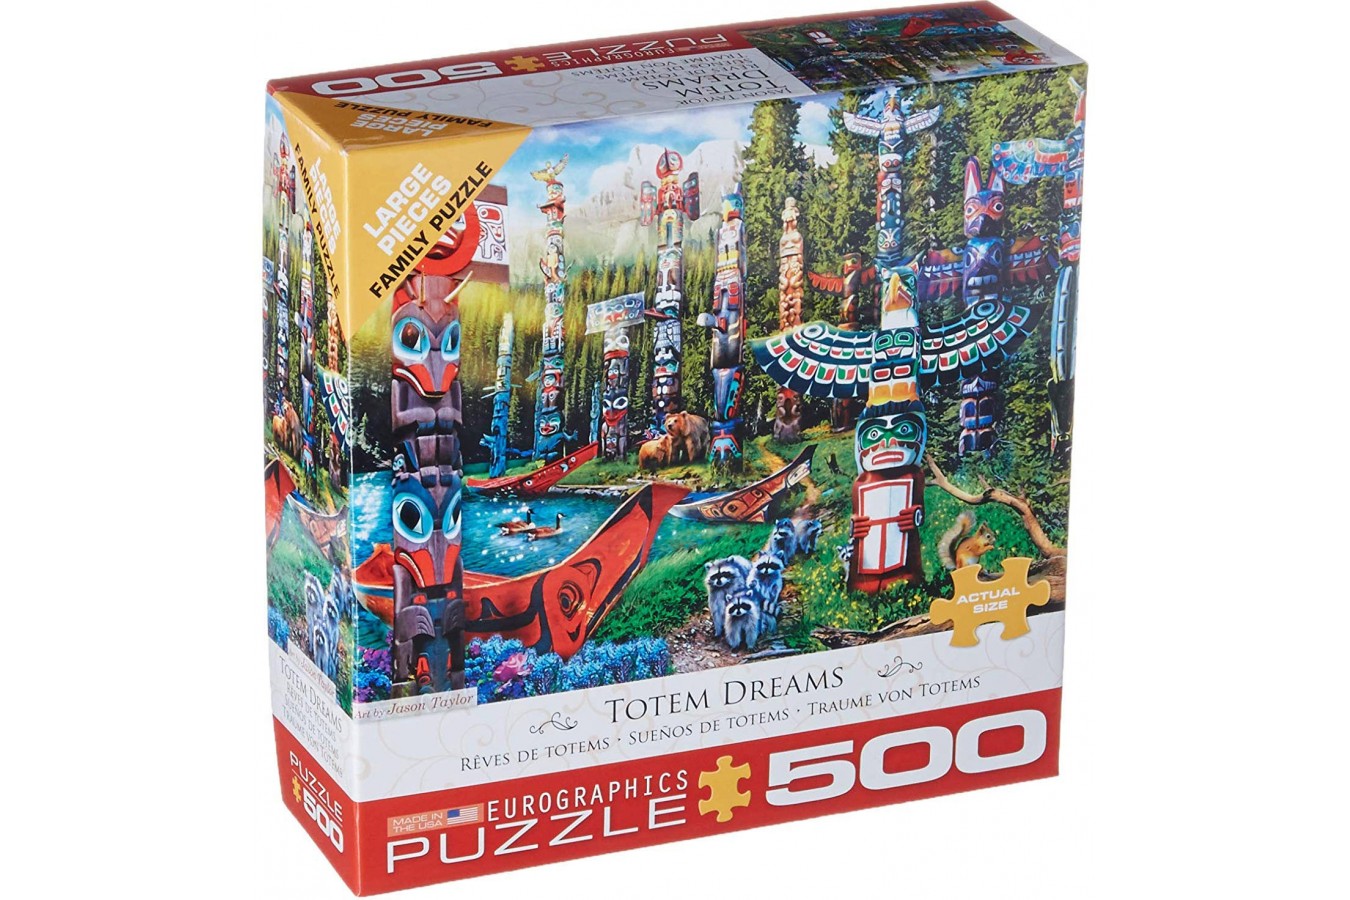 Puzzle Eurographics - Totem Dreams, 500 piese XXL (8500-5361) imagine